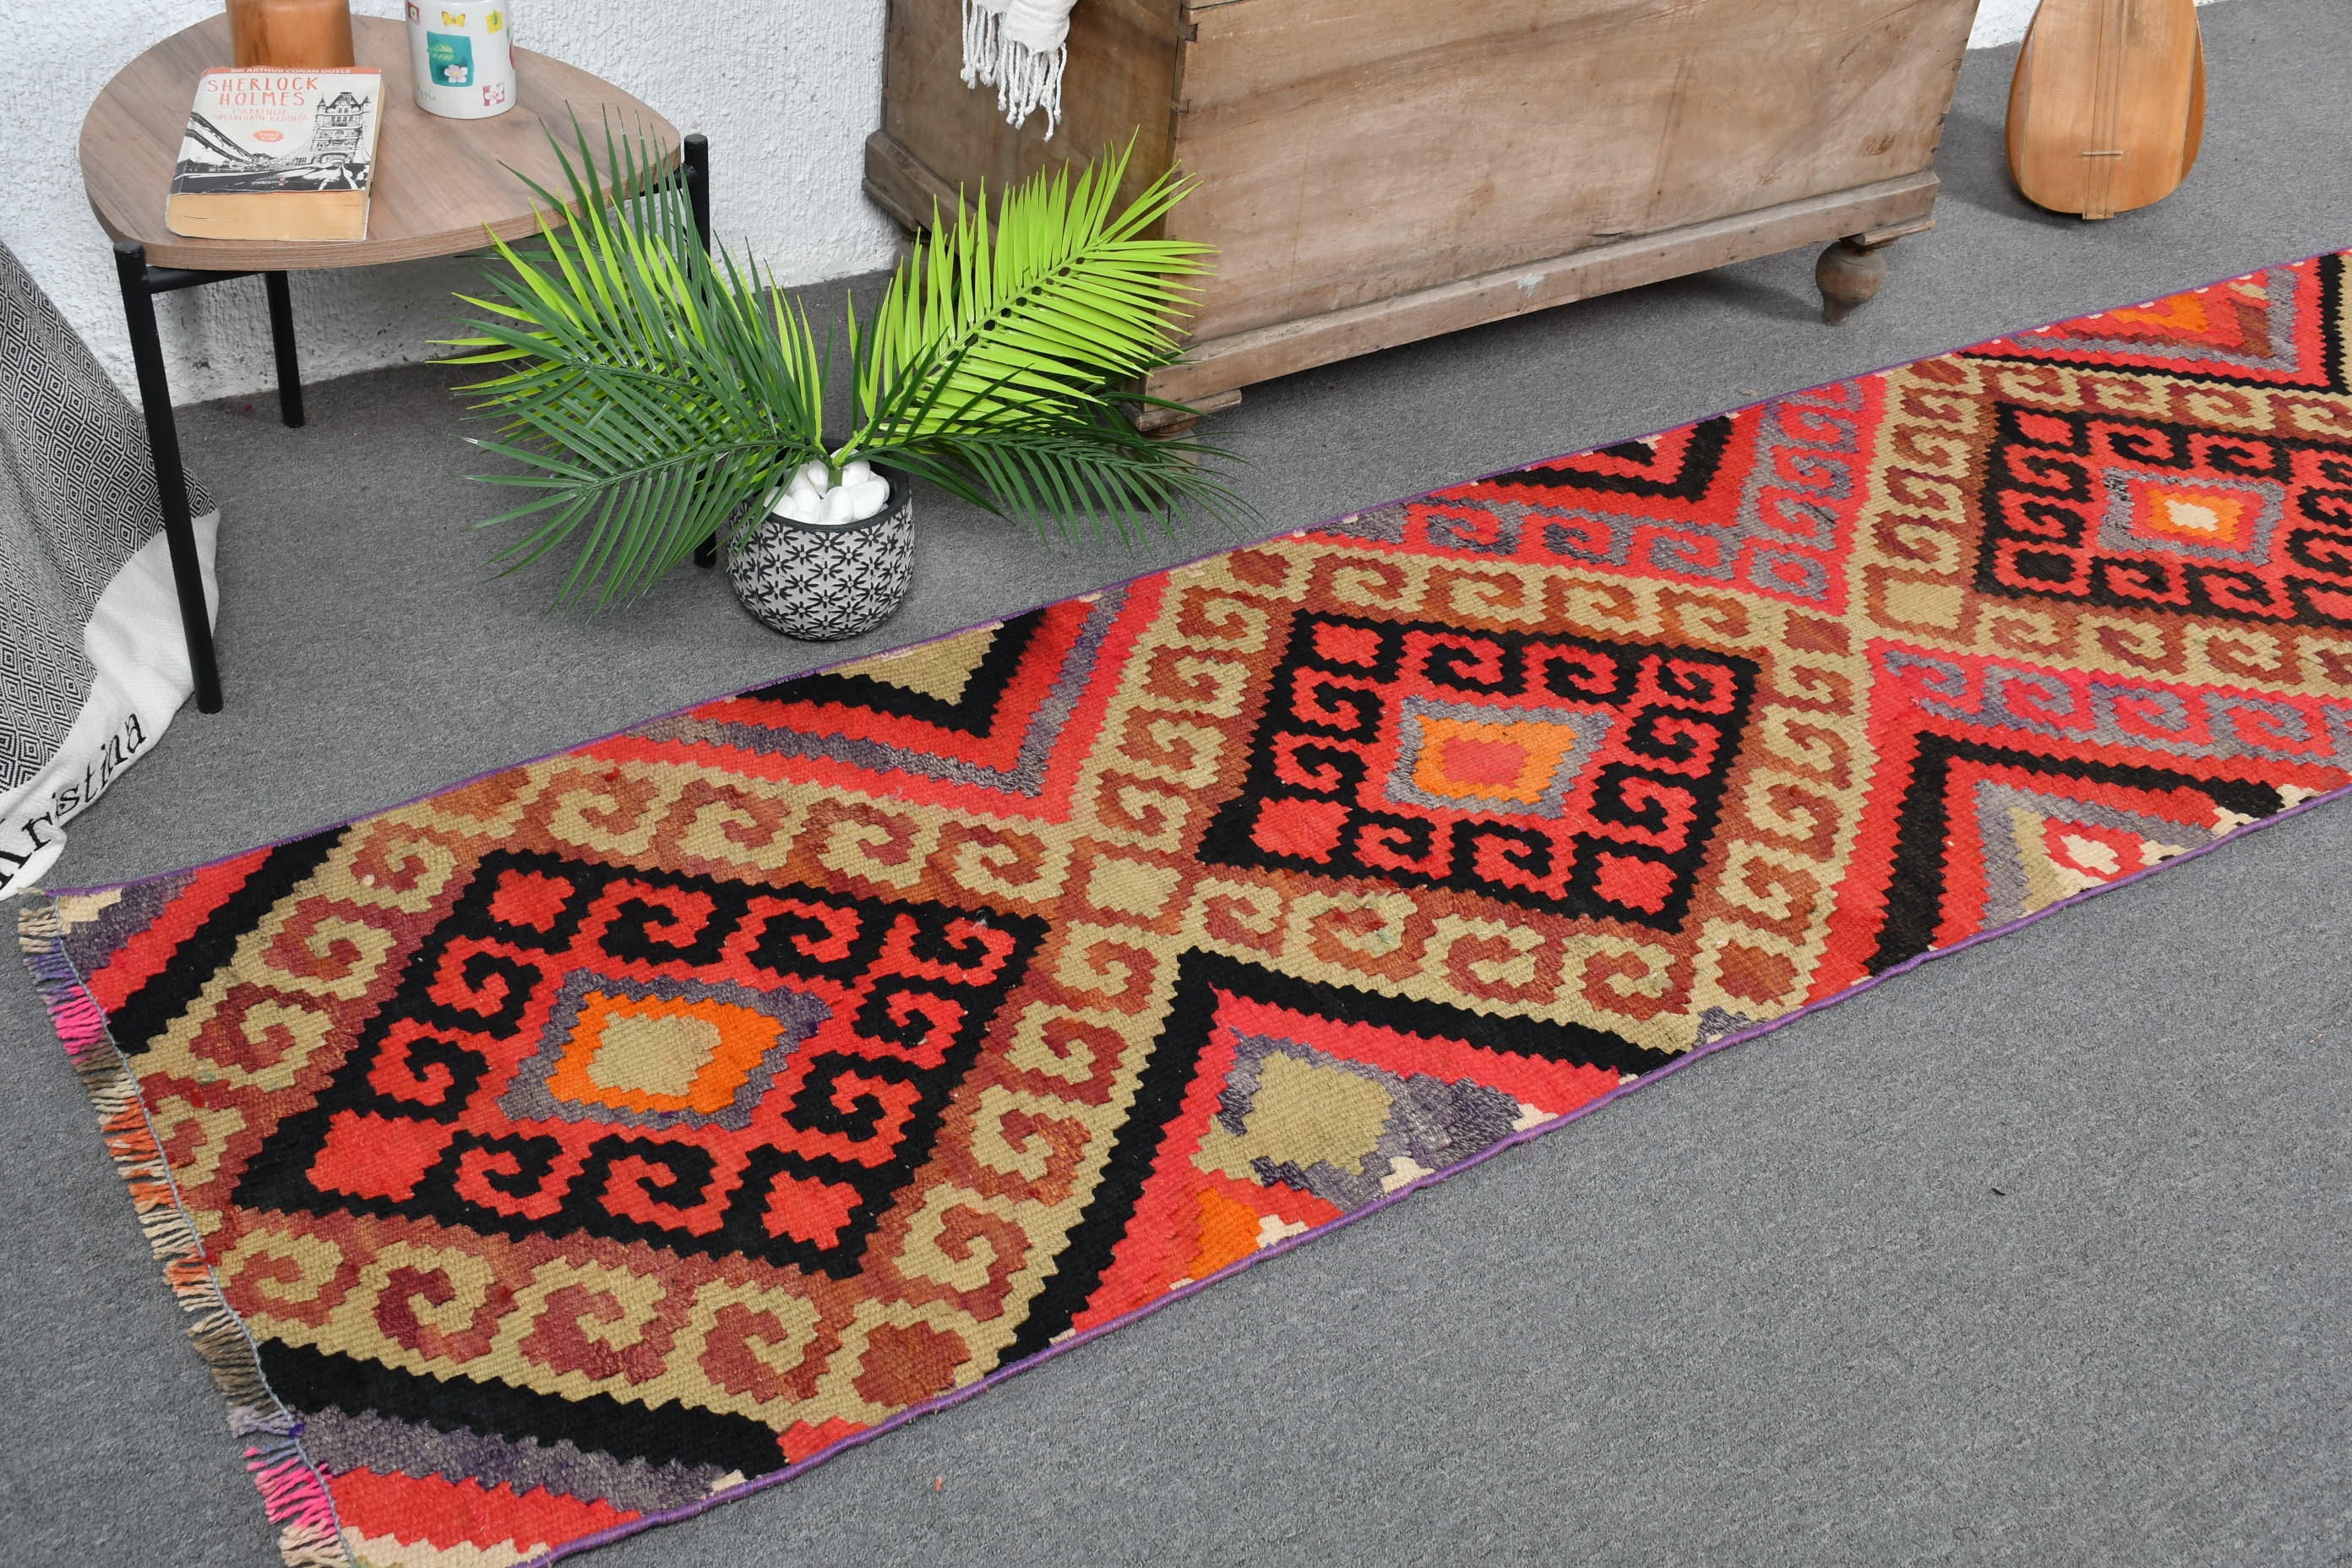 Moderna alfombra de área, tamaño grande (4620)